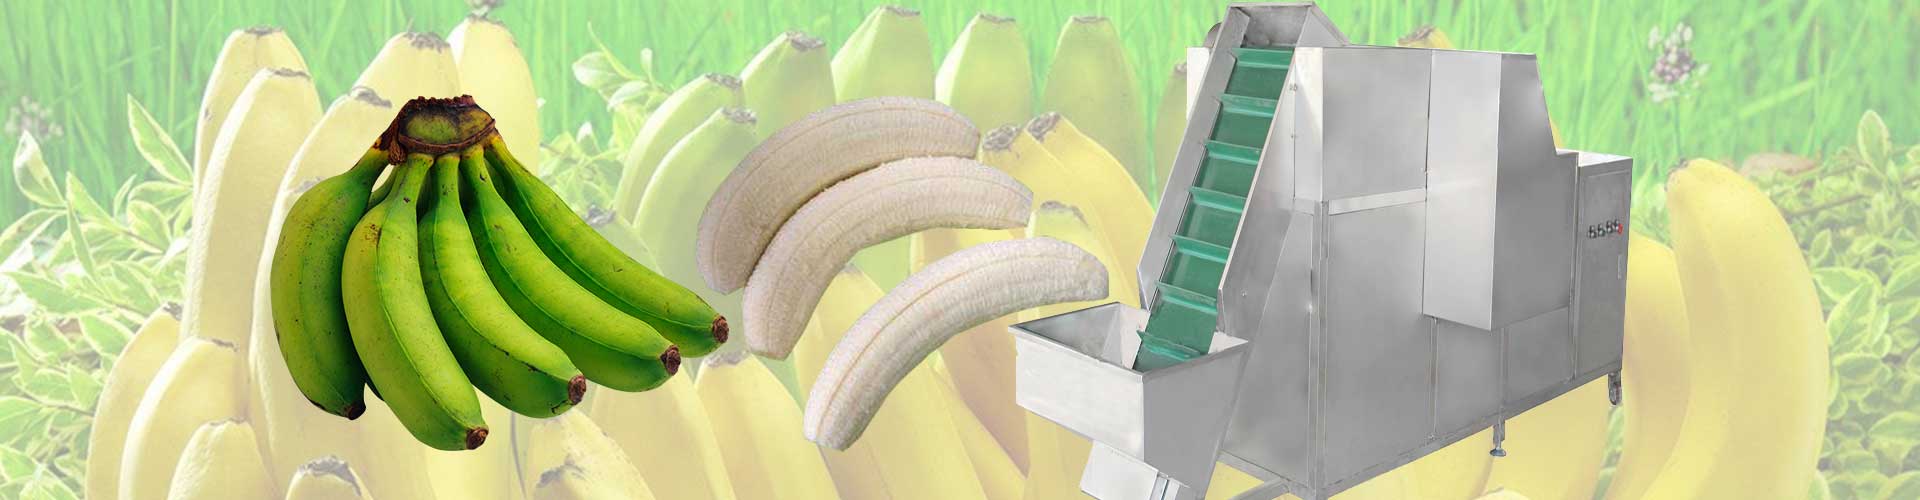 Banner04-Automatic-Feeding-Green-Unripe-Banana-Peeling-Machine-for-Sale